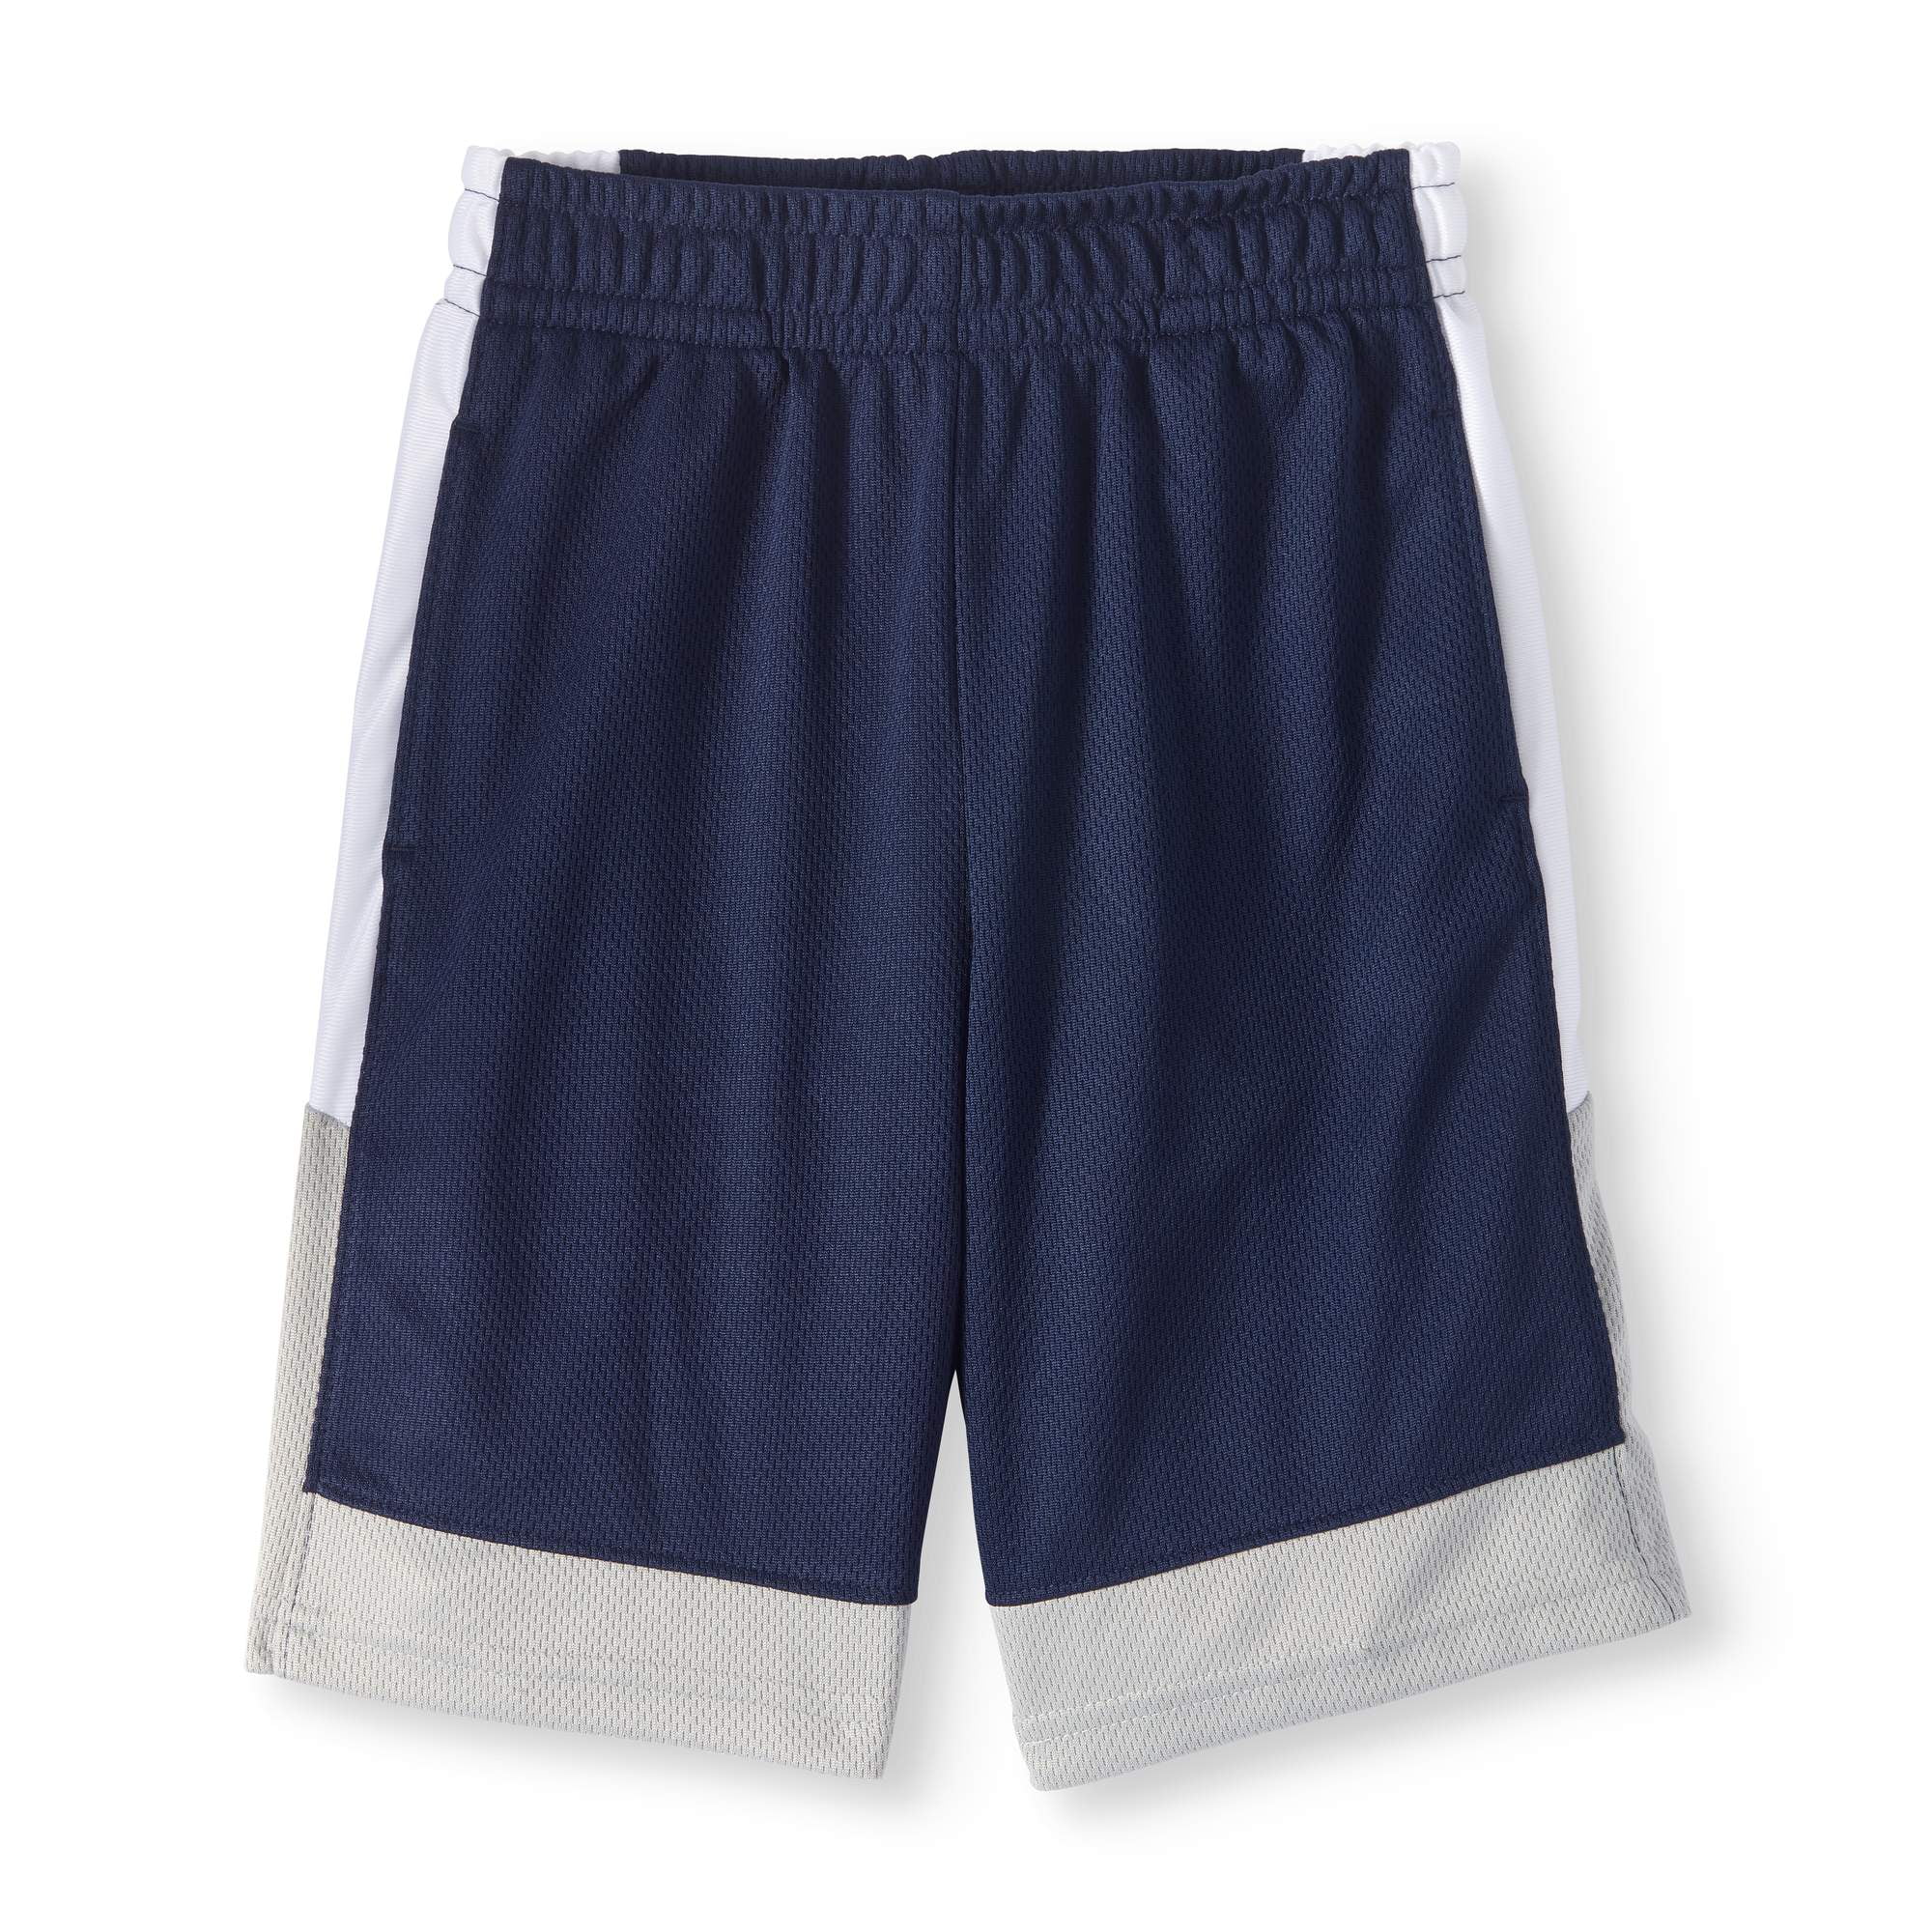 Boys' Mesh Shorts with Pockets - Walmart.com